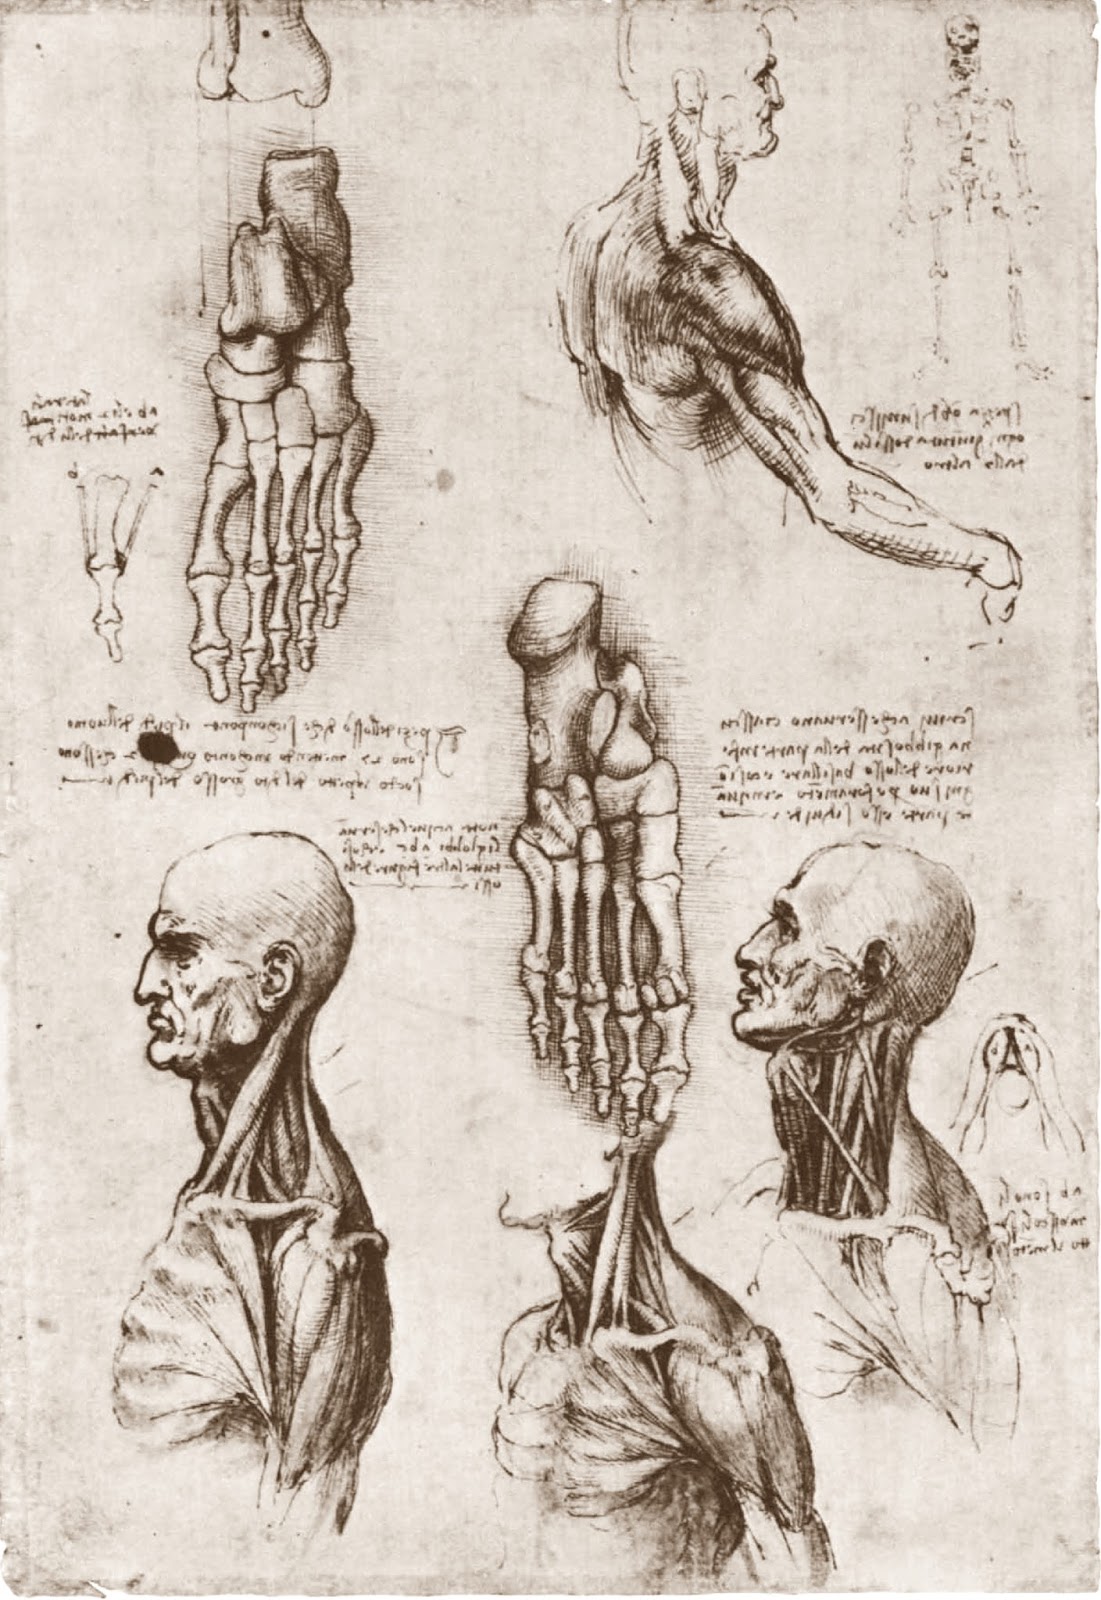 Leonardo+da+Vinci-1452-1519 (798).jpg